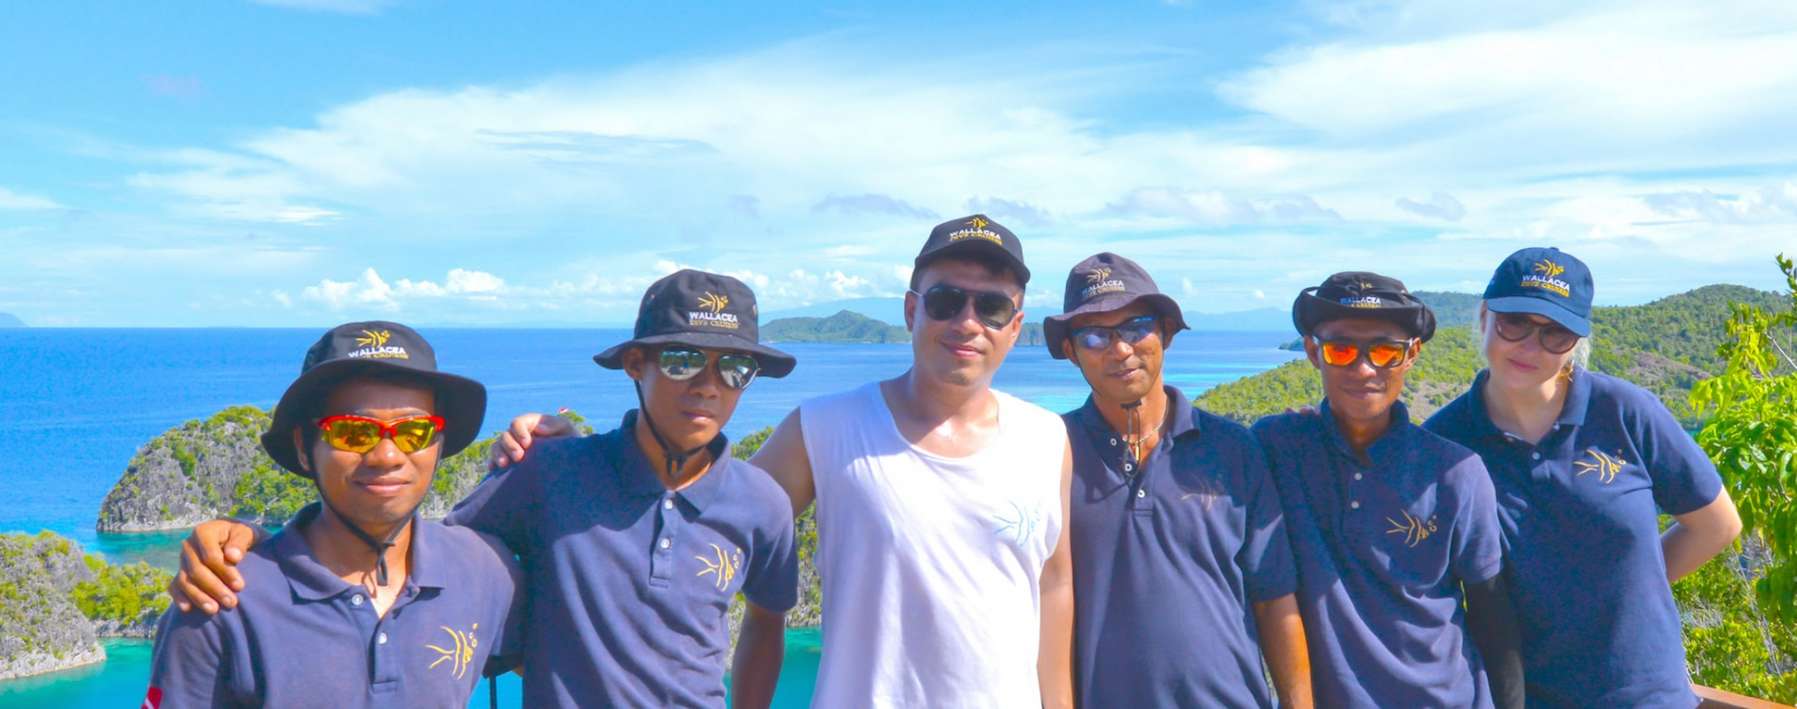 The Crew | Raja Ampat